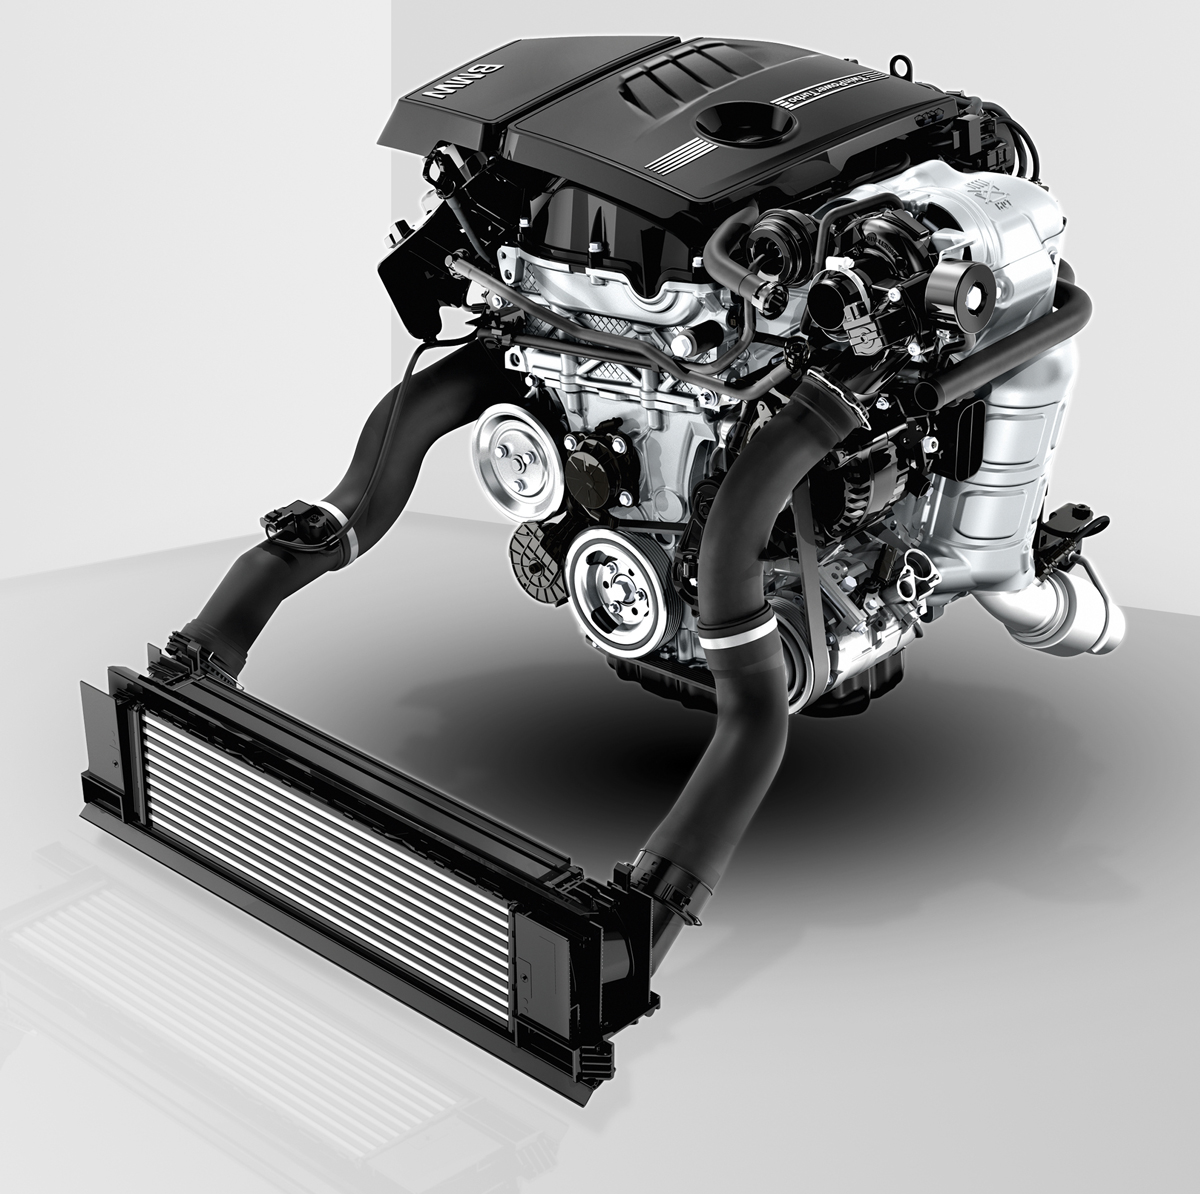   1.6-litre BMW TwinPower Turbo in-line gasoline engine